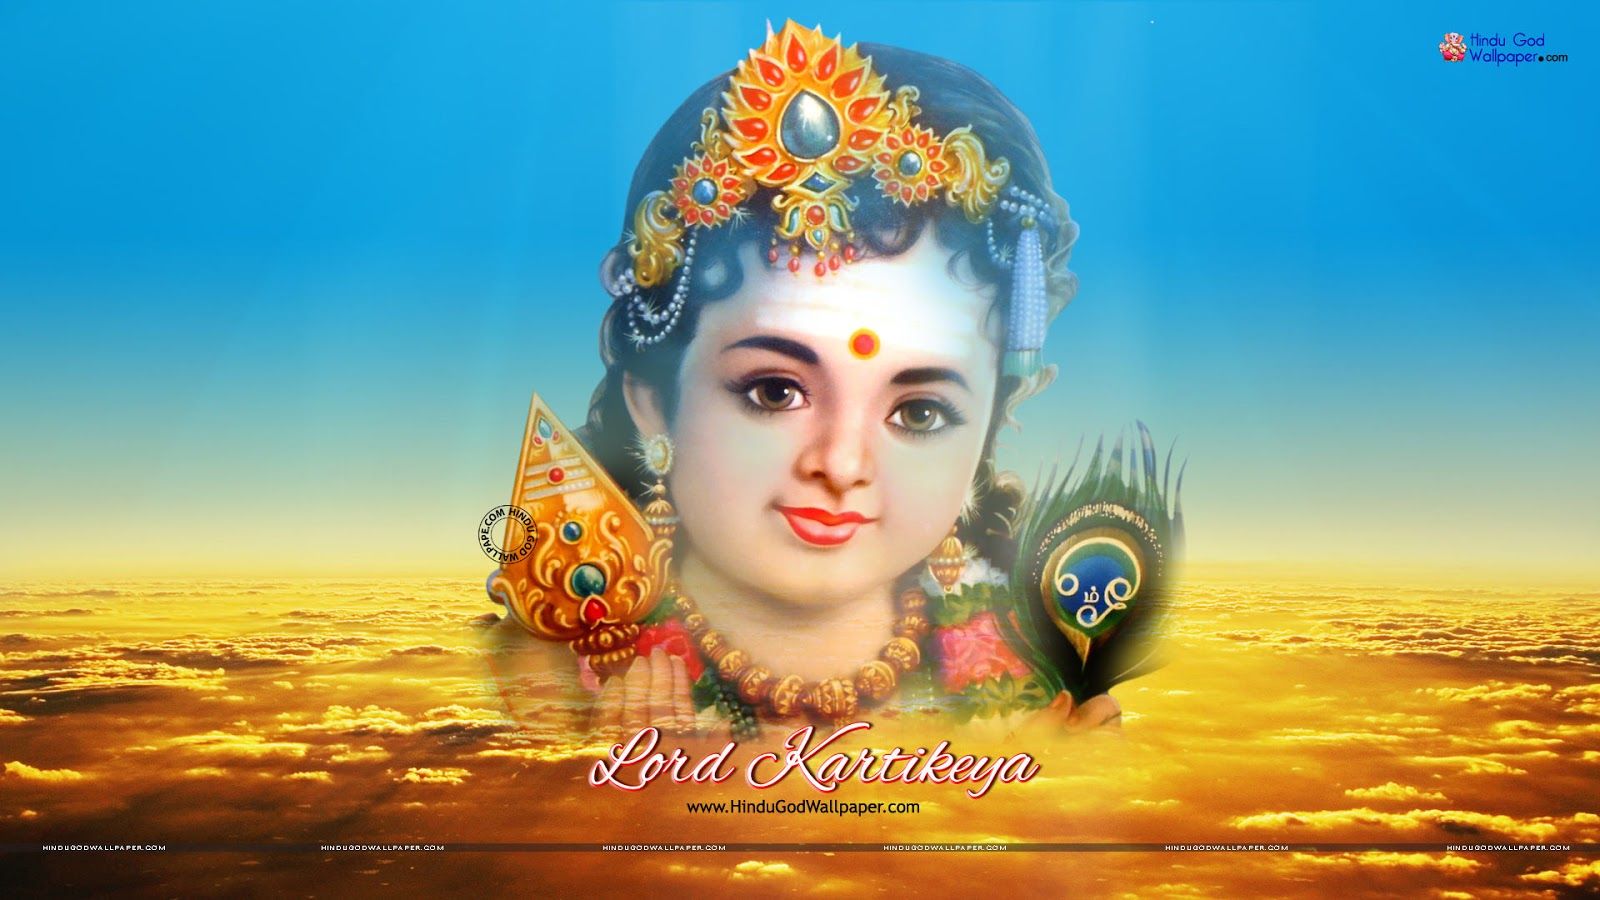 Hindu God Murugan Images & Kartikeya Wallpapers in 4K UHD